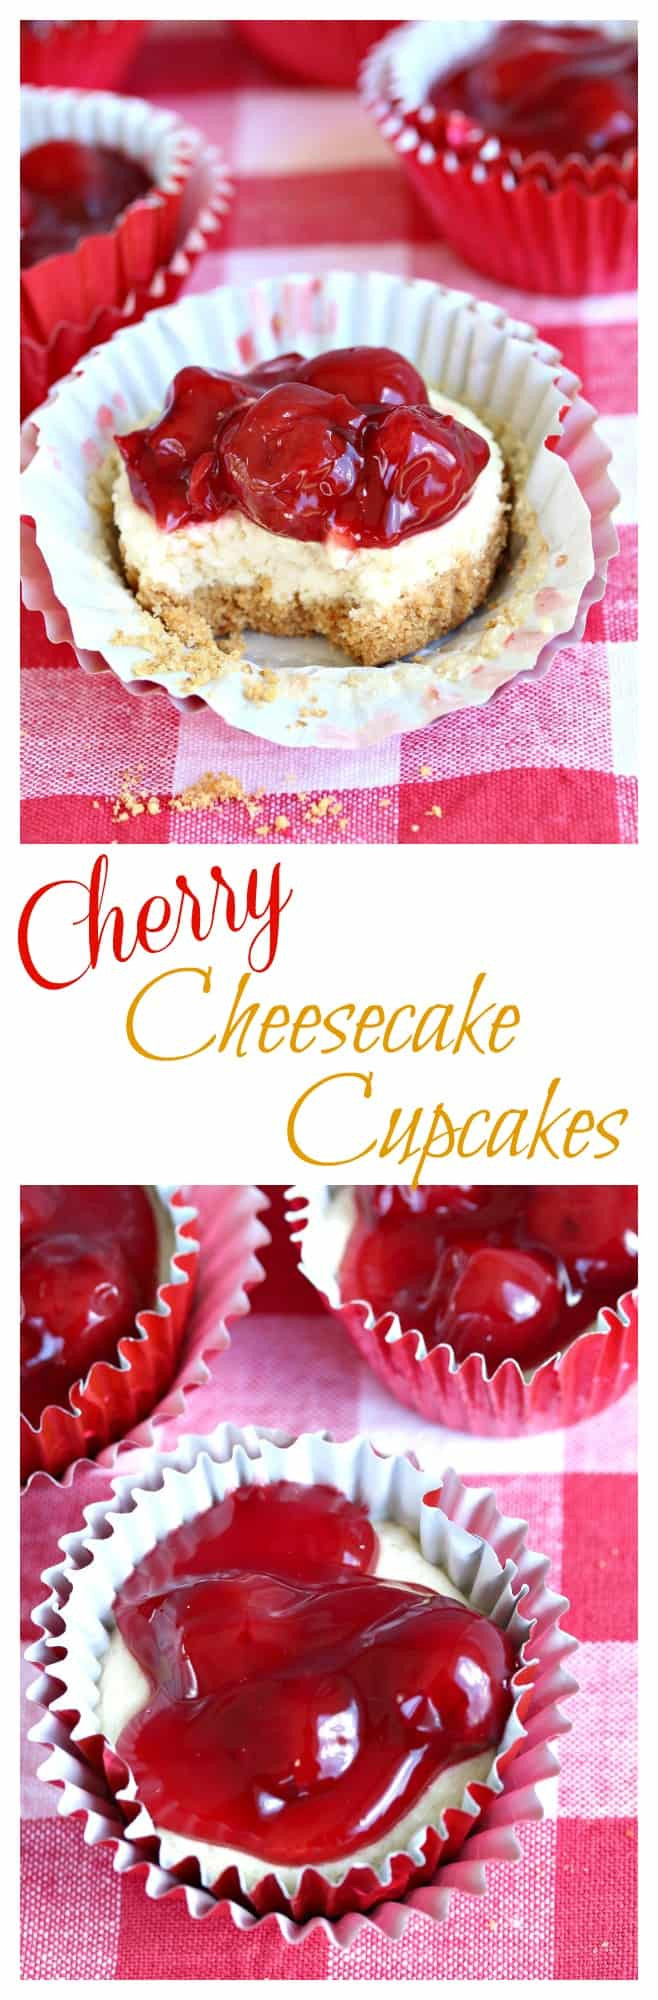 Cherry Cheese Cake Cupcakes
 Cherry Cheesecake Cupcakes The Cozy Cook